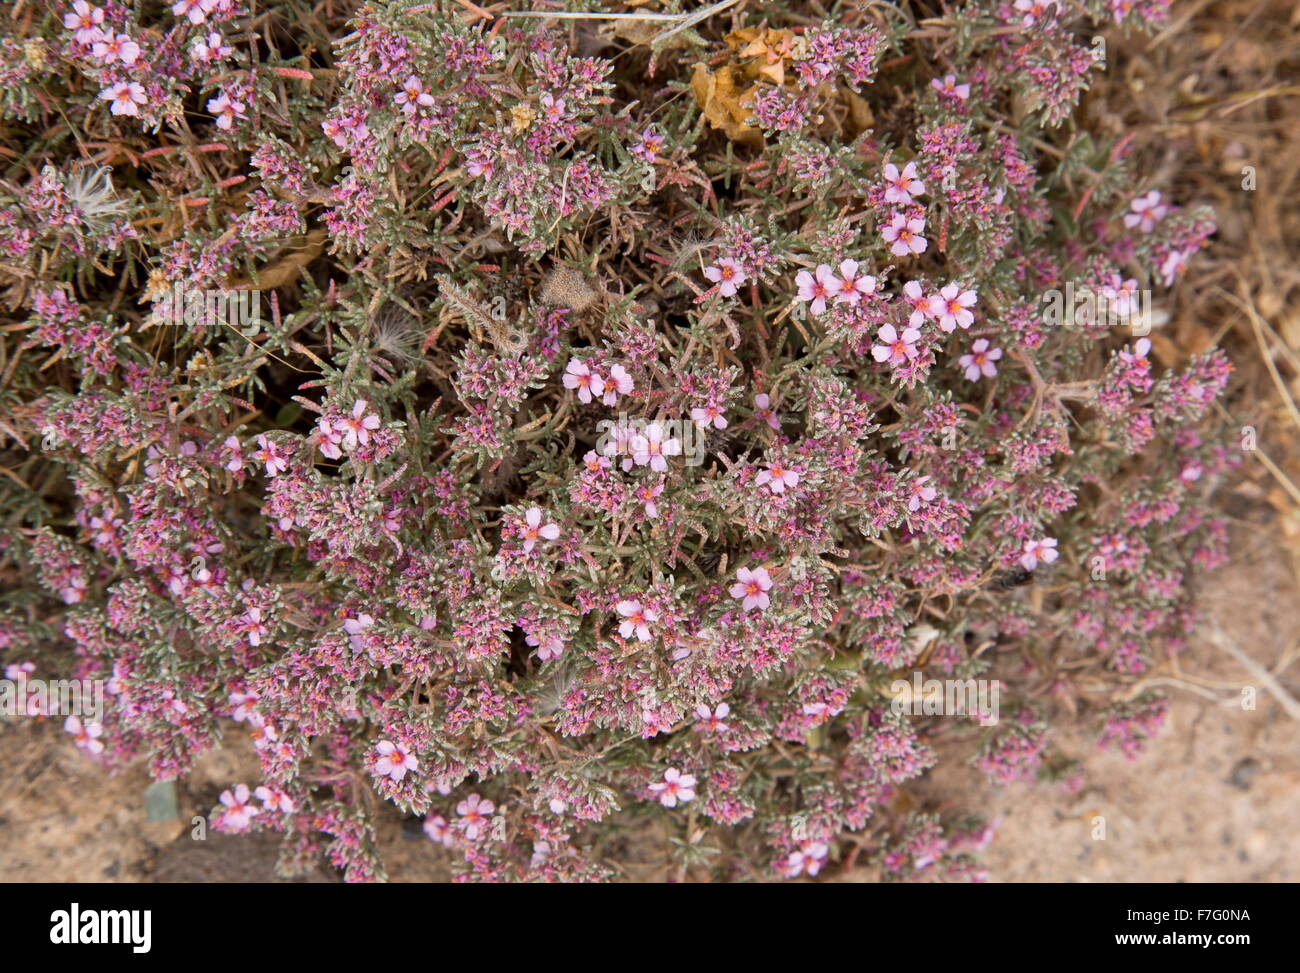 A Sea-heath, Frankenia capitata, in flower by saltpans, Lanzarote. Stock Photo